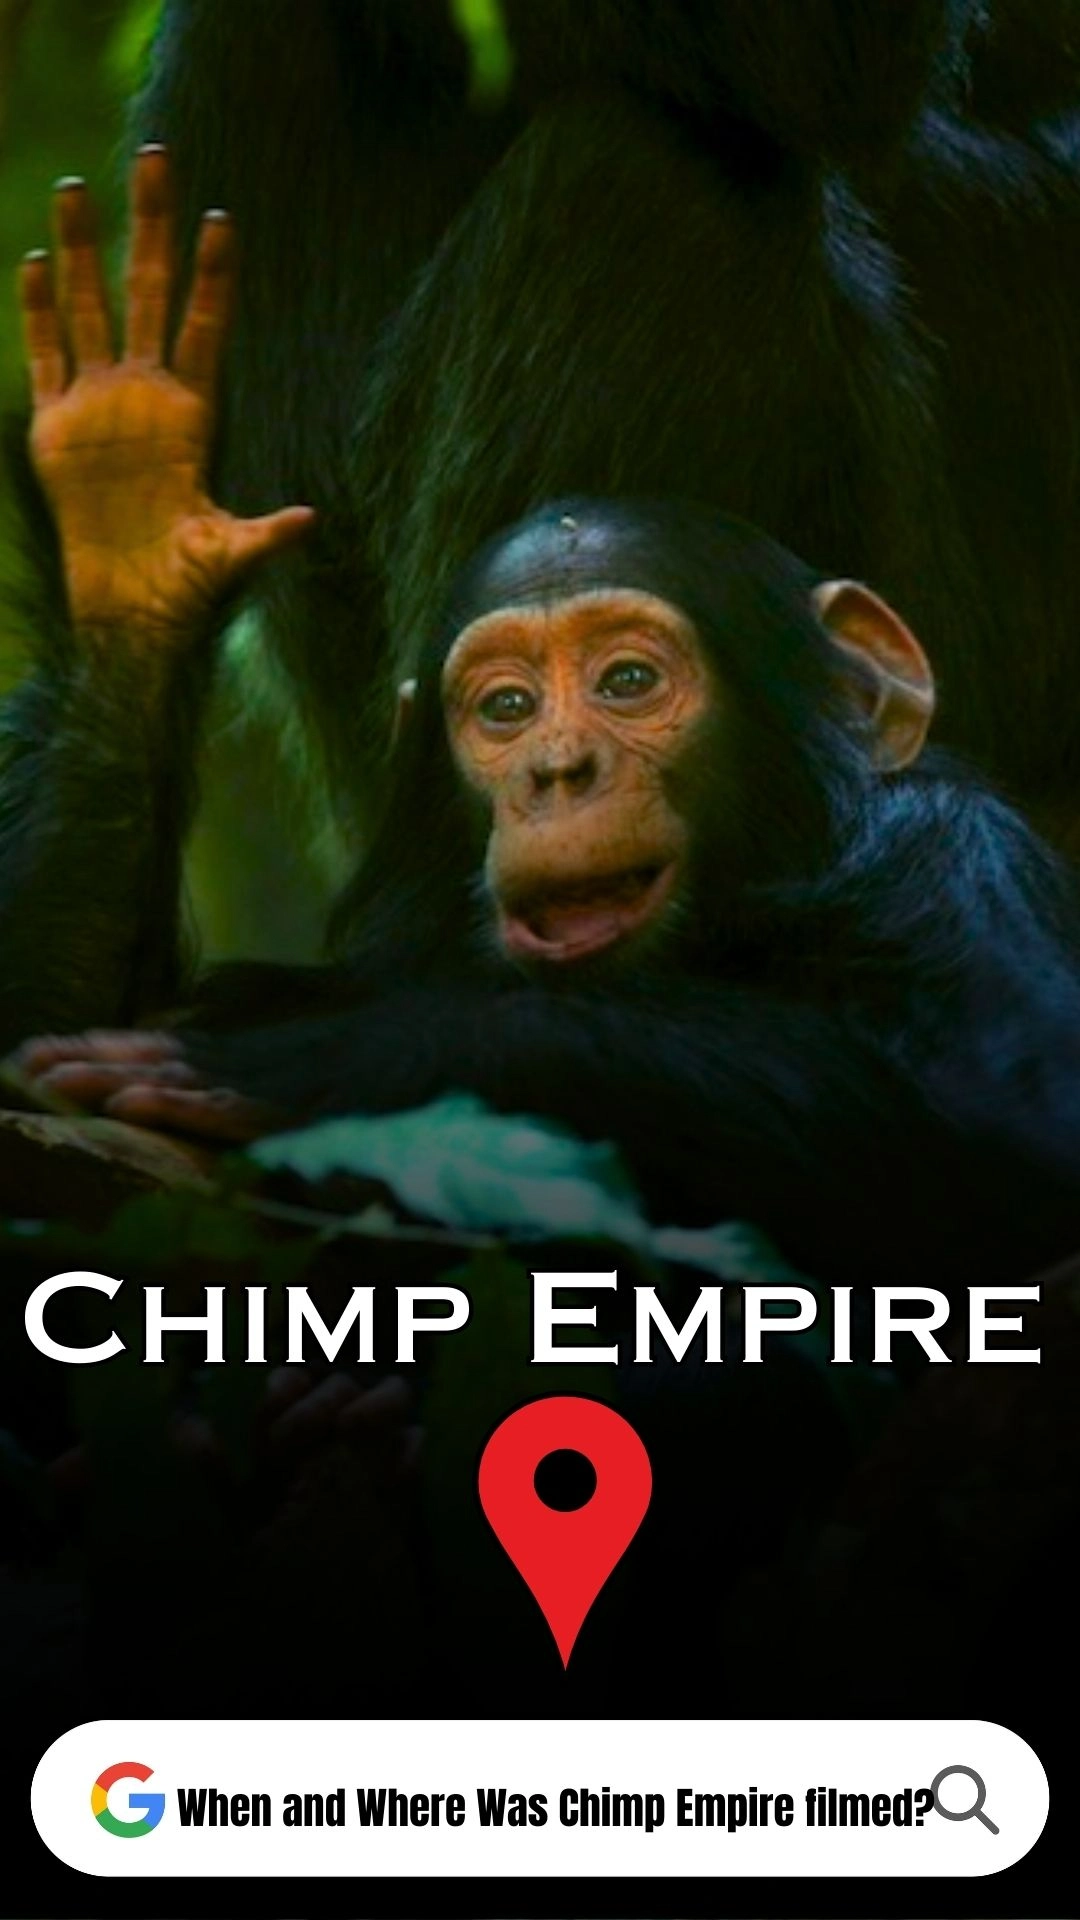 Chimp Empire Filming Locations